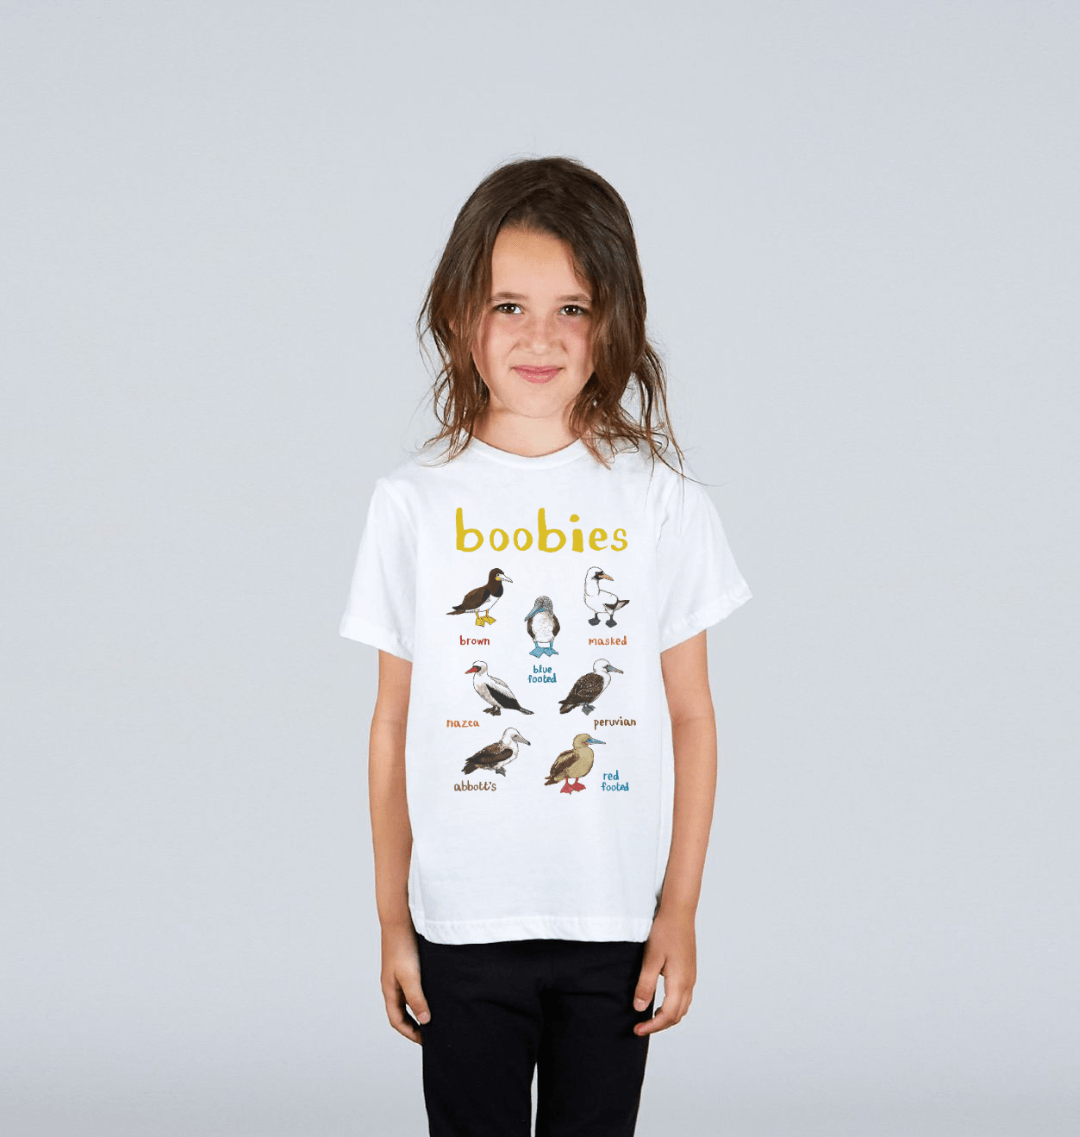 All about the Boobies!' Golden Boobies child's t-shirt